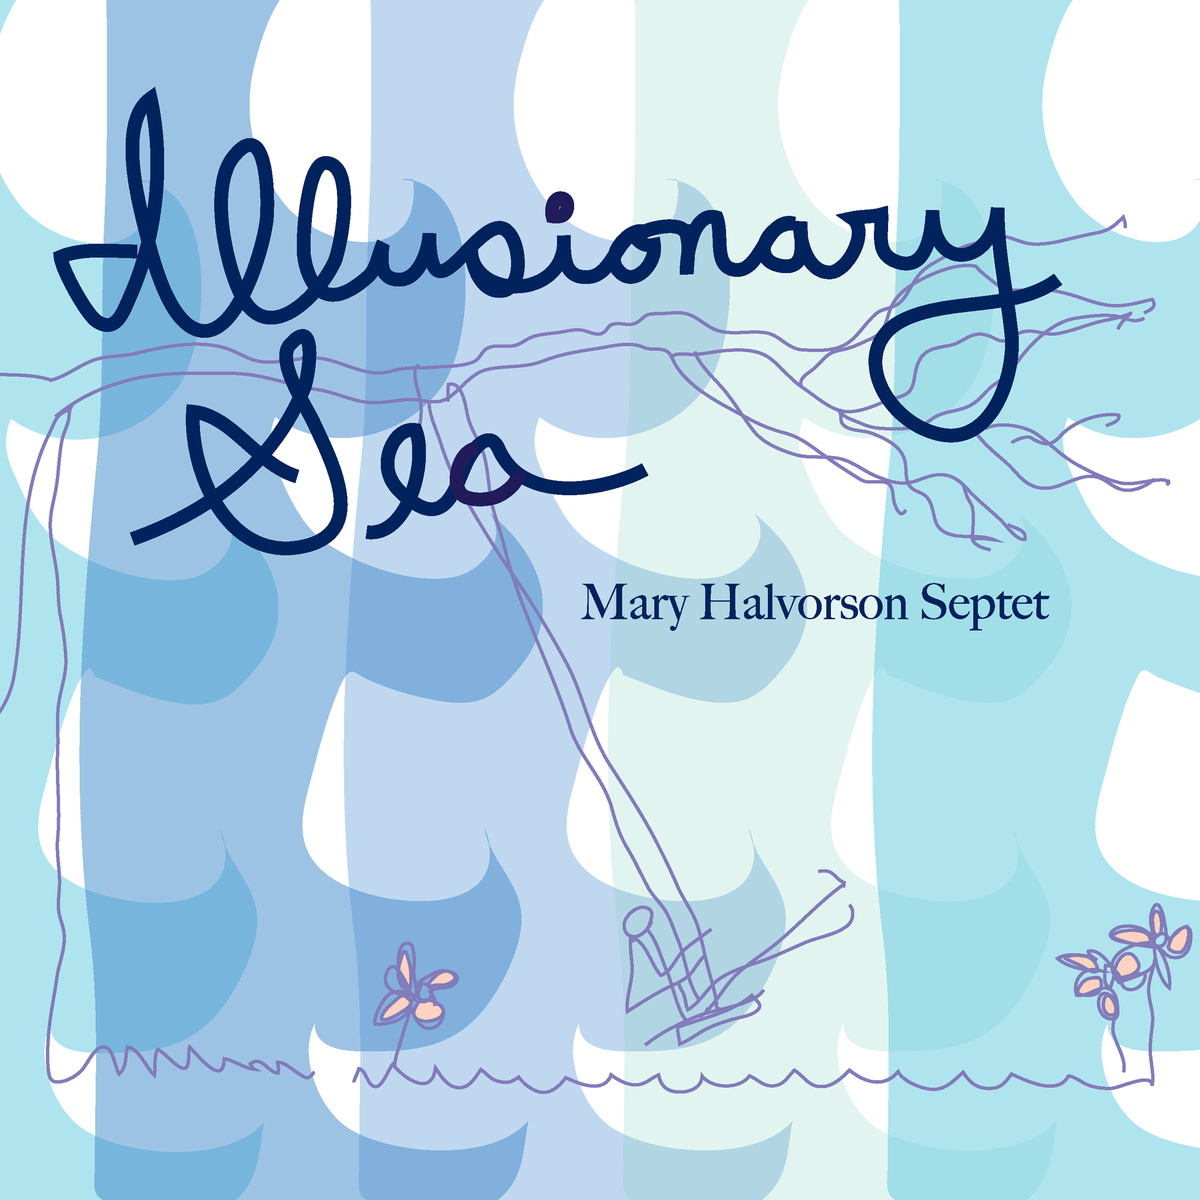 Mary Halvorson Septet 'Illusionary Sea' - Same Great Music, Larger Setting